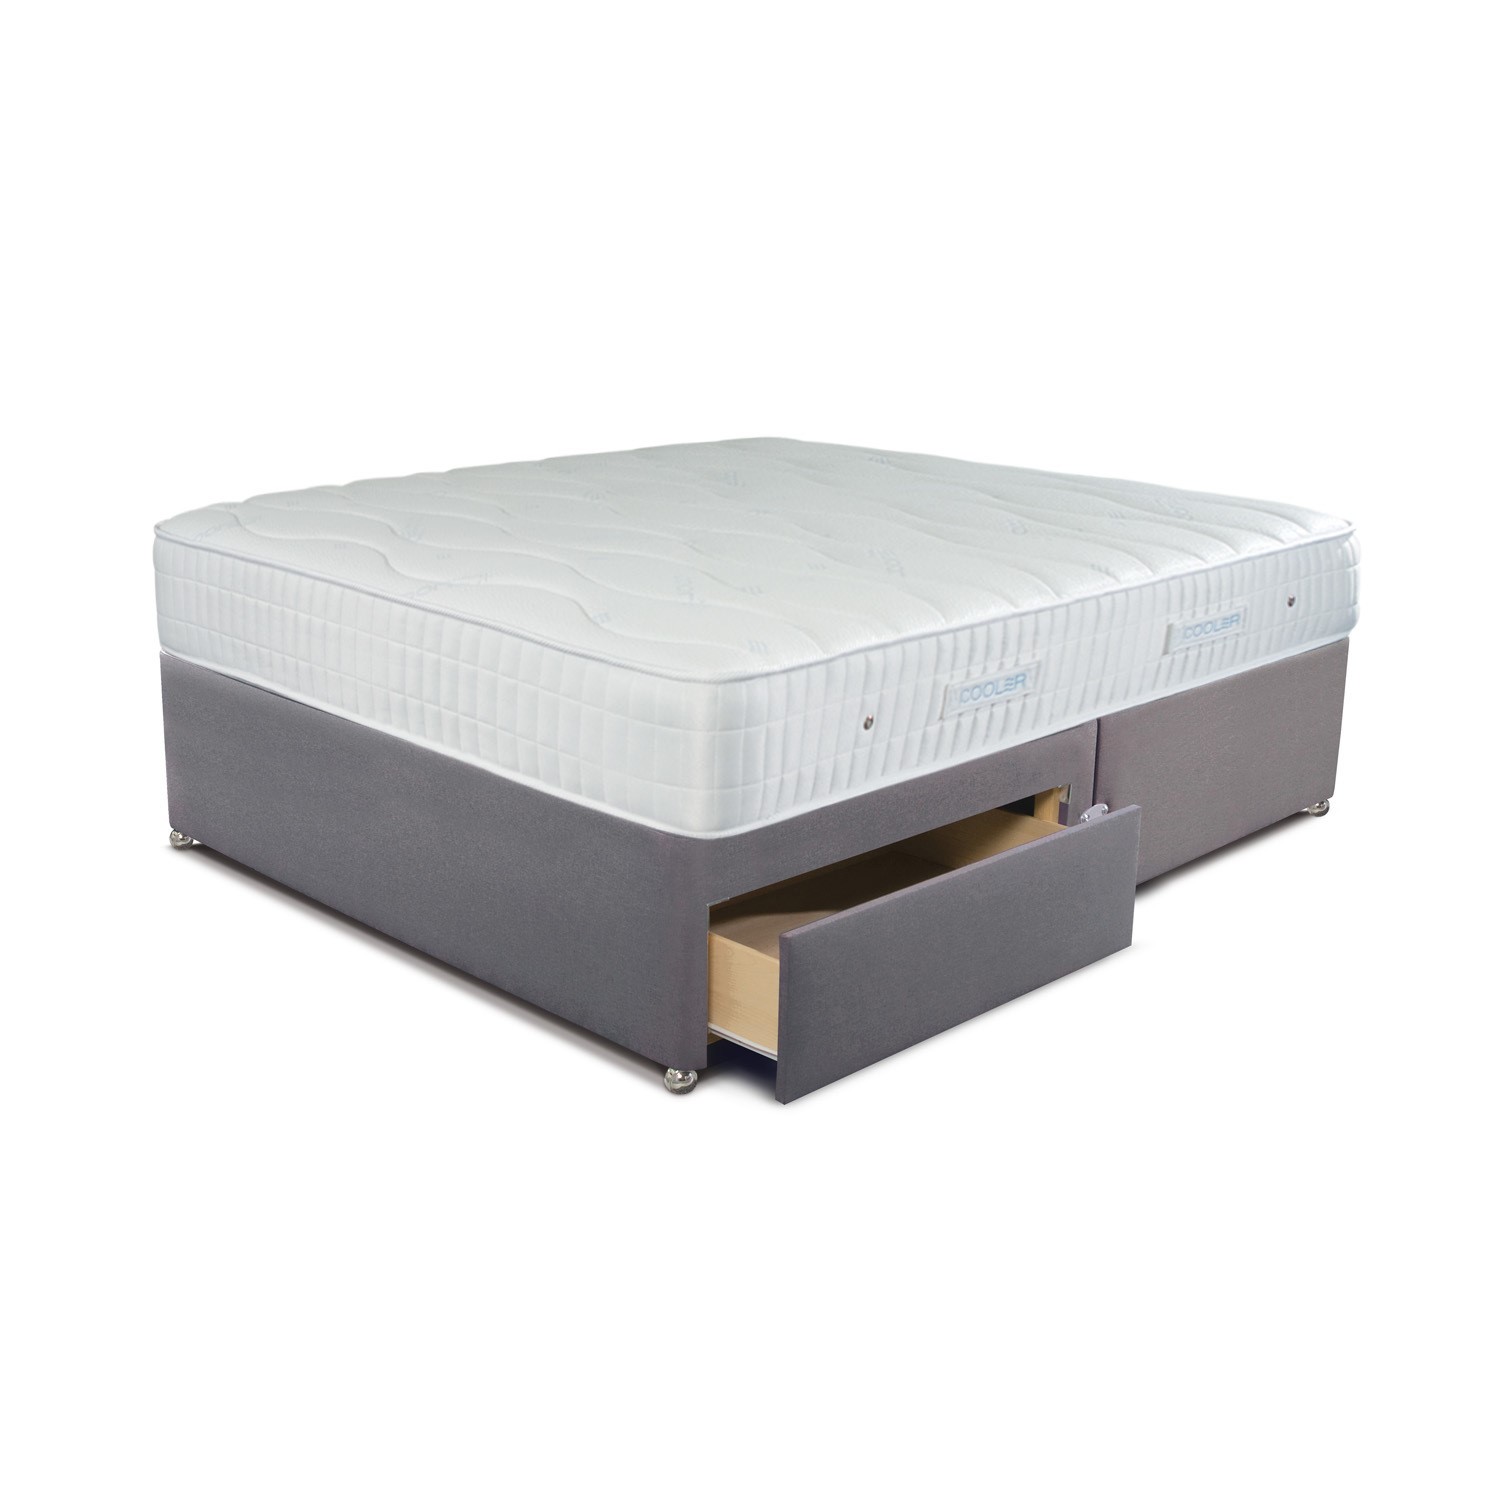 Photo of Sleepeezee double 2 drawer divan bed in joshua grey with cooler pinnacle 1000 mattress